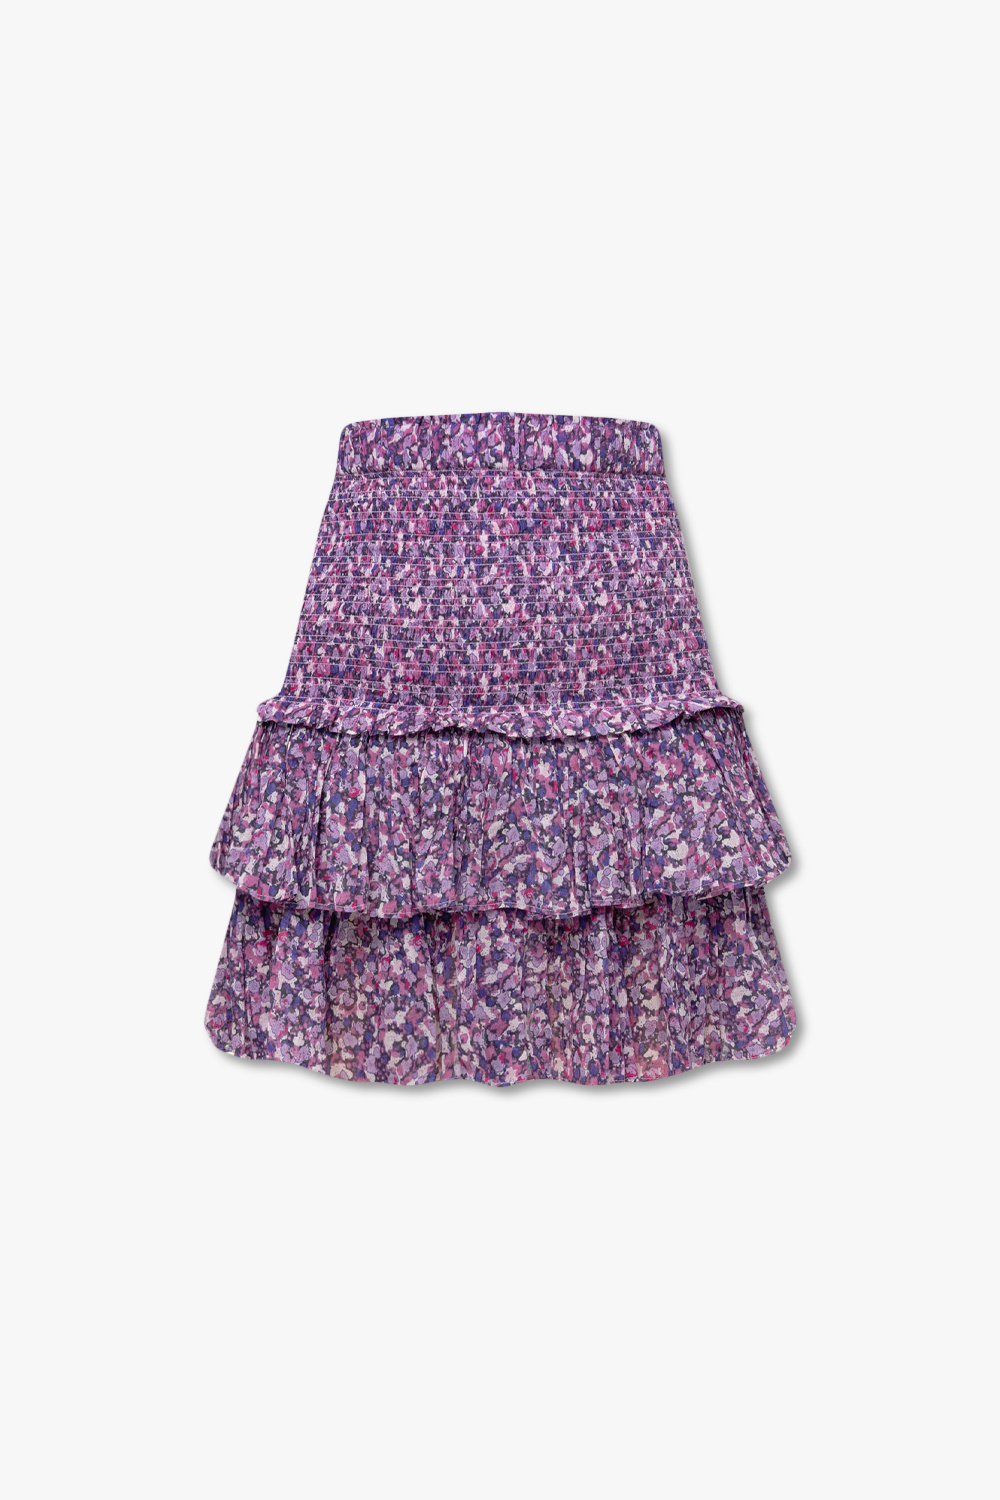 Isabel Marant Étoile ‘Naomi’ patterned skirt